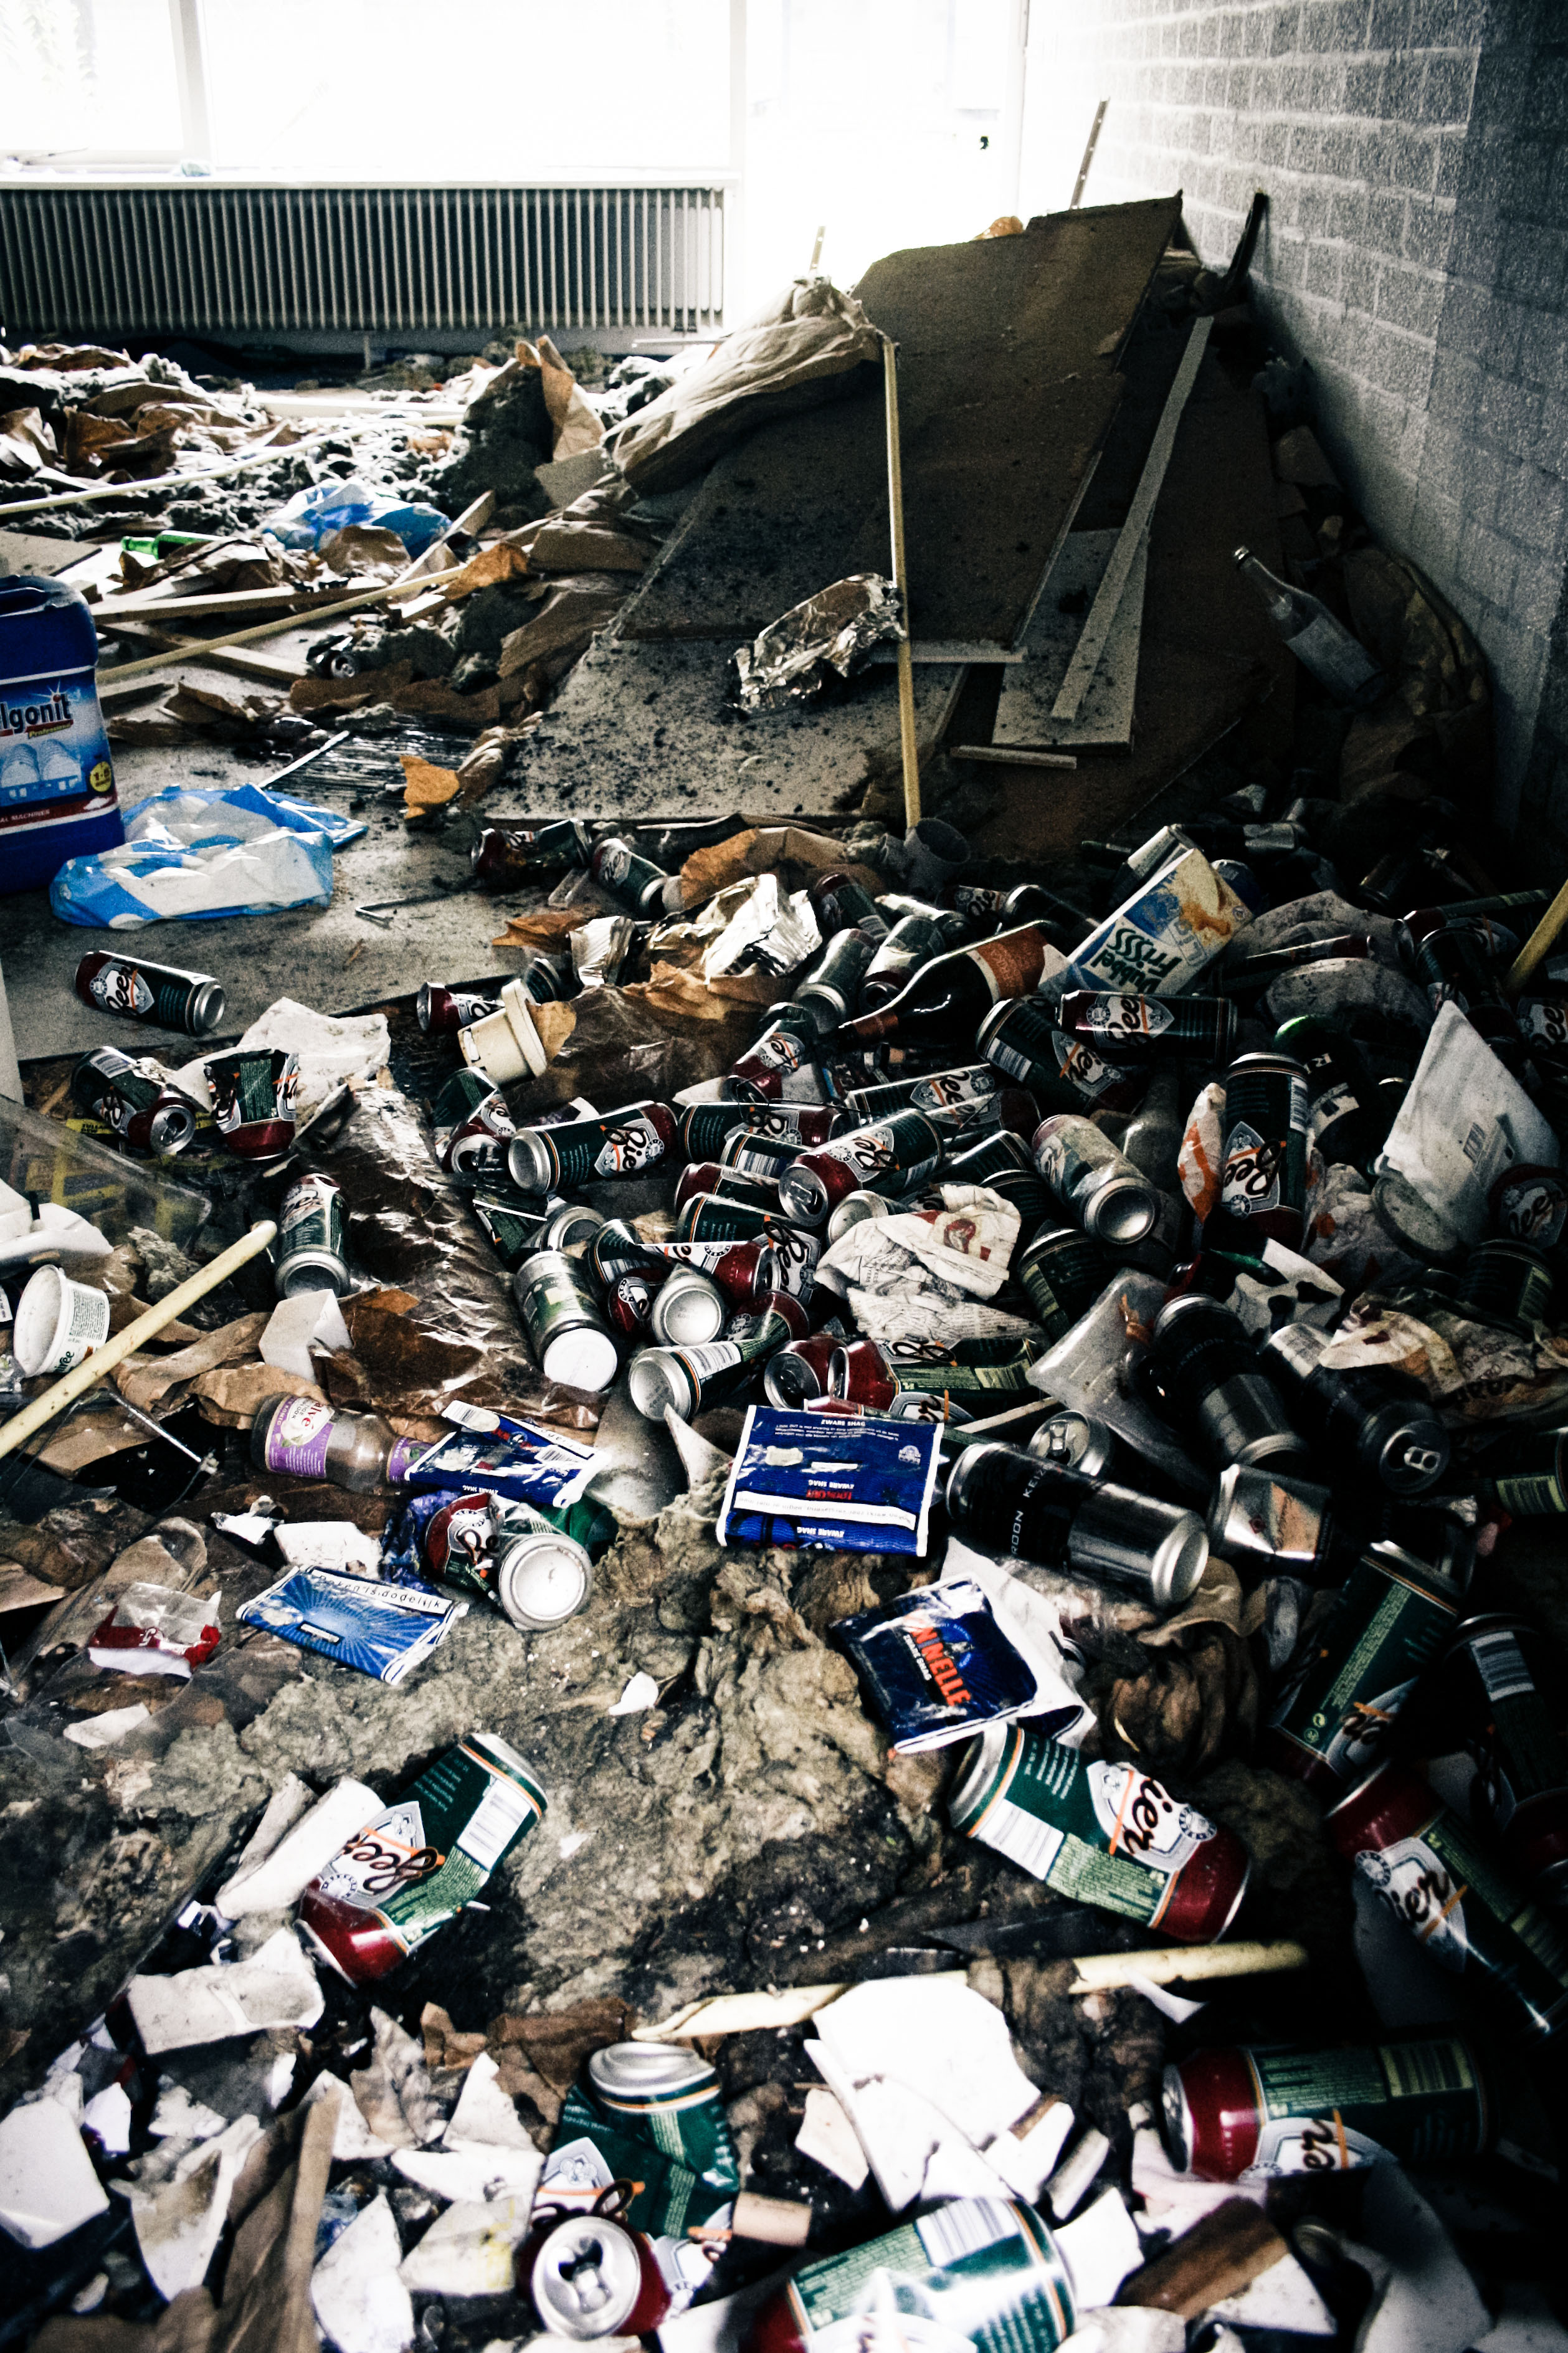 Trash inside abandoned building, Abandon, Trash, Rubbish, Room, HQ Photo